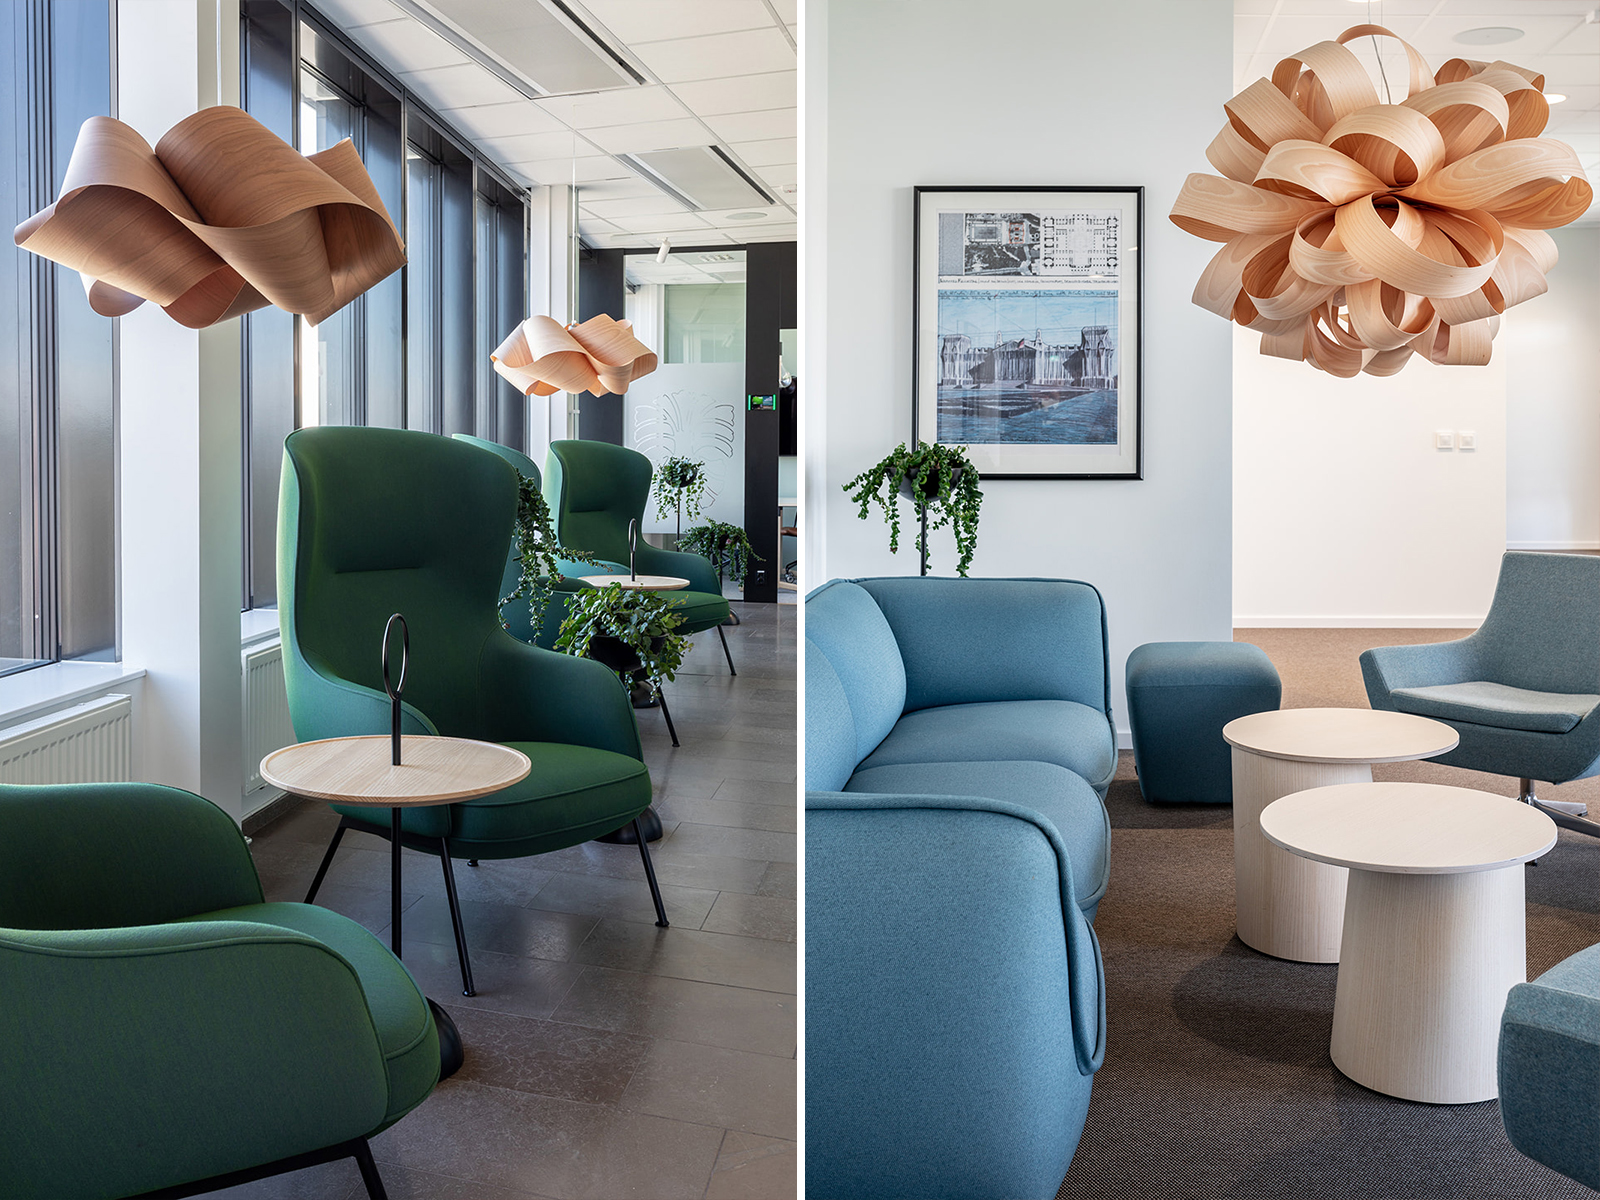 LZF’s classic lamps add character to Söderberg & Partners’ Örebro office